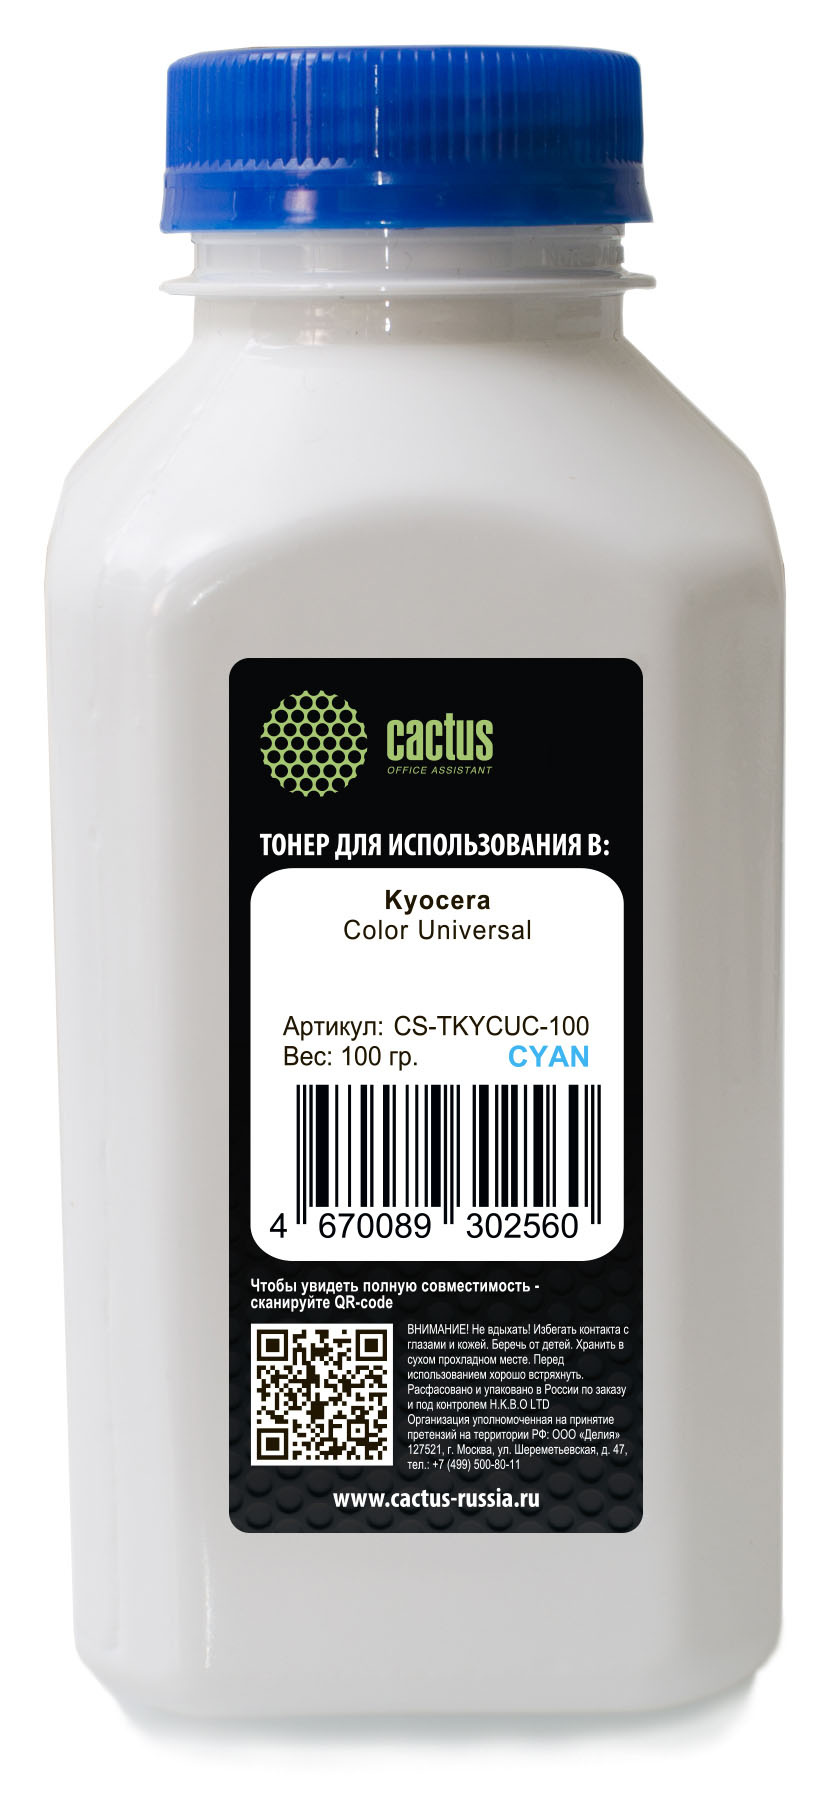 Тонер Cactus CS-TKYCUC-100 голубой флакон 100гр. для принтера Kyocera Color Universal